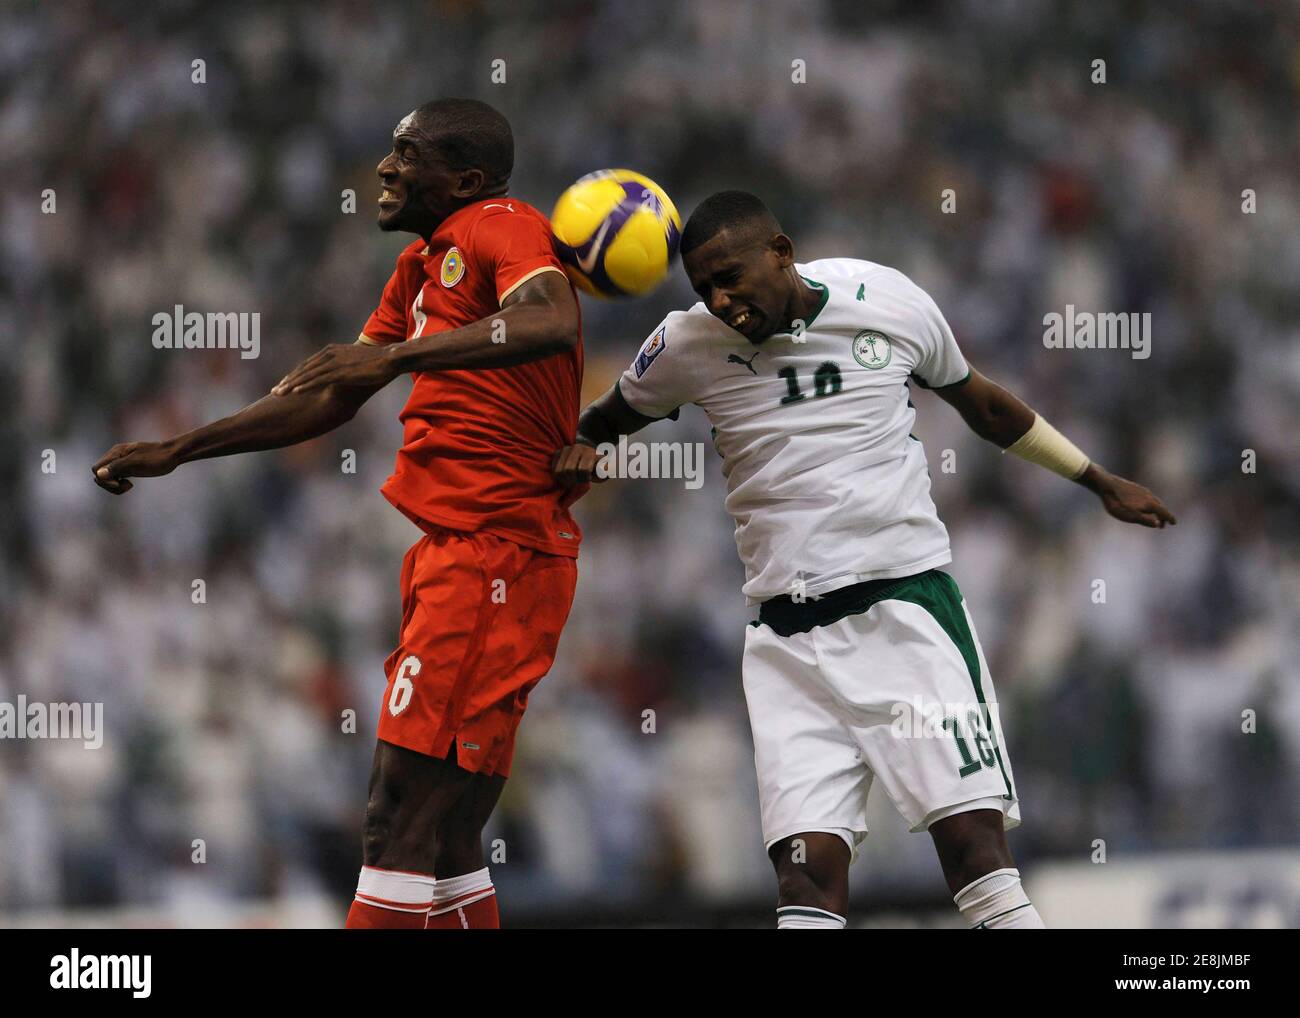 Hamad Al Montashari (R) of Saudi Arabia fights for the ball with Jaycee Okwunwanne of Bahrain during their World Cup 2010 qualifying soccer match in Riyadh September 9, 2009. REUTERS/Fahad Shadeed (SAUDI ARABIA SPORT SOCCER) Stock Photo